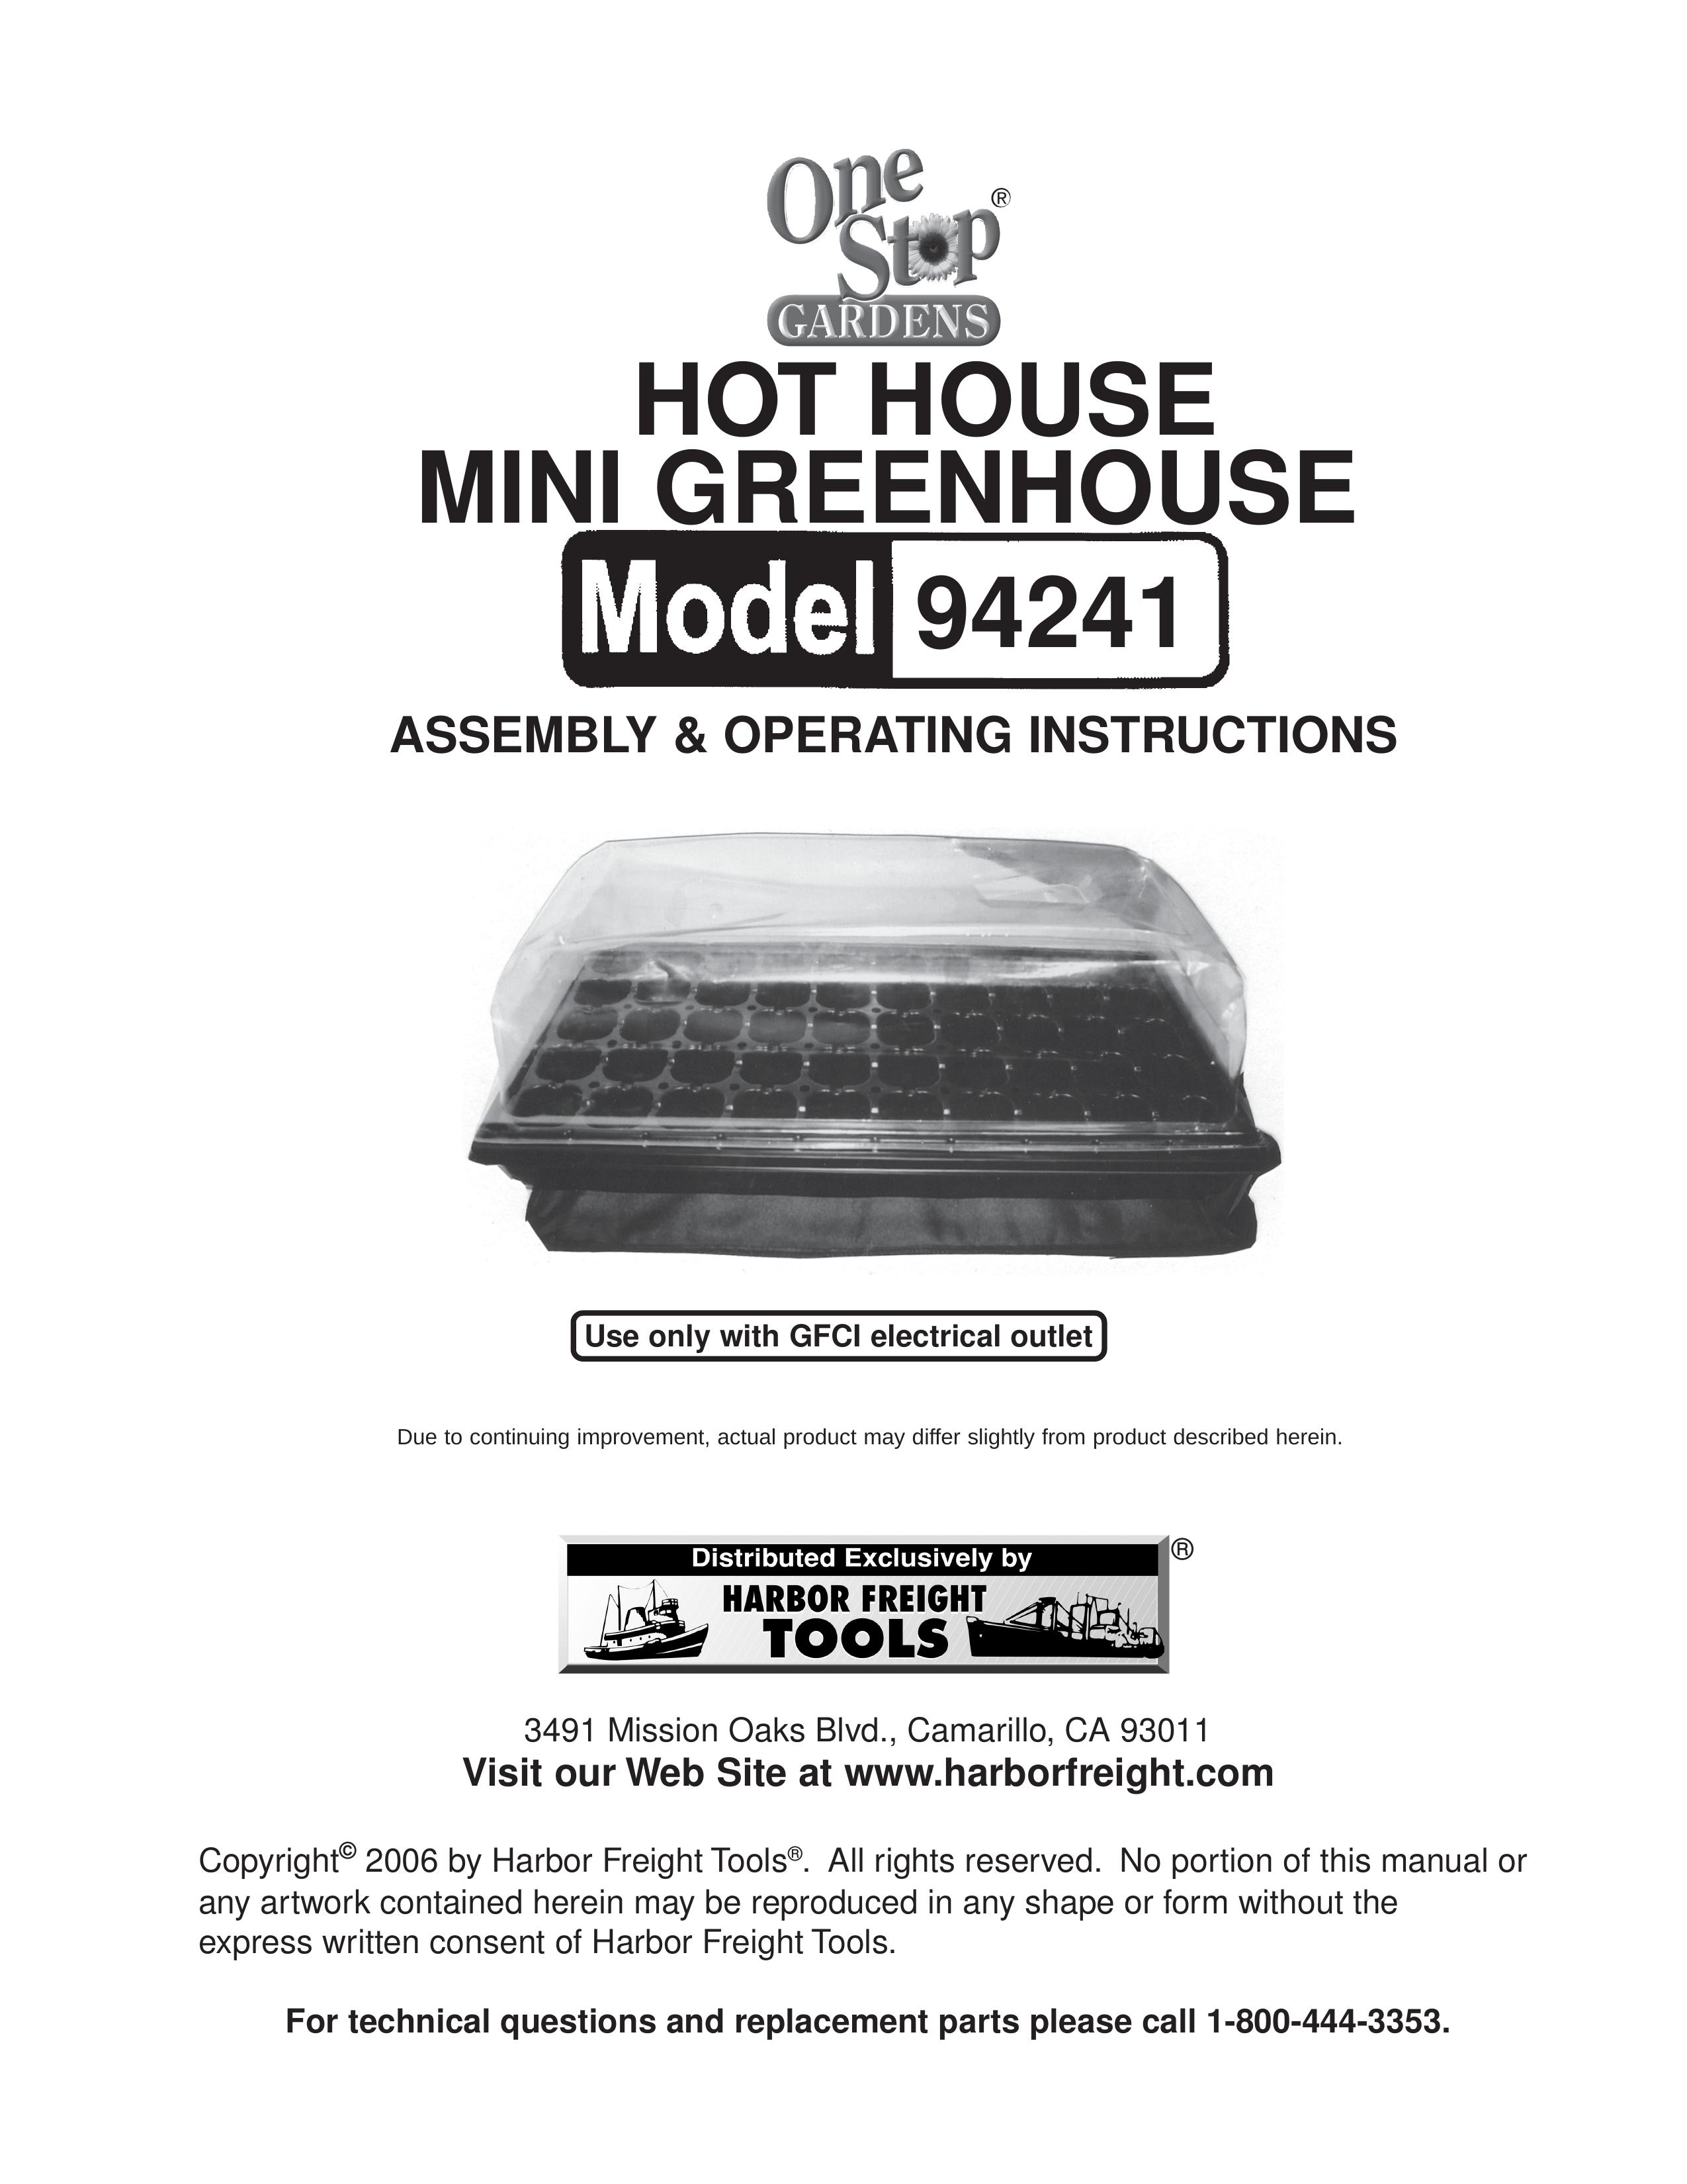 Harbor Freight Tools 94241 Greenhouse Kit User Manual